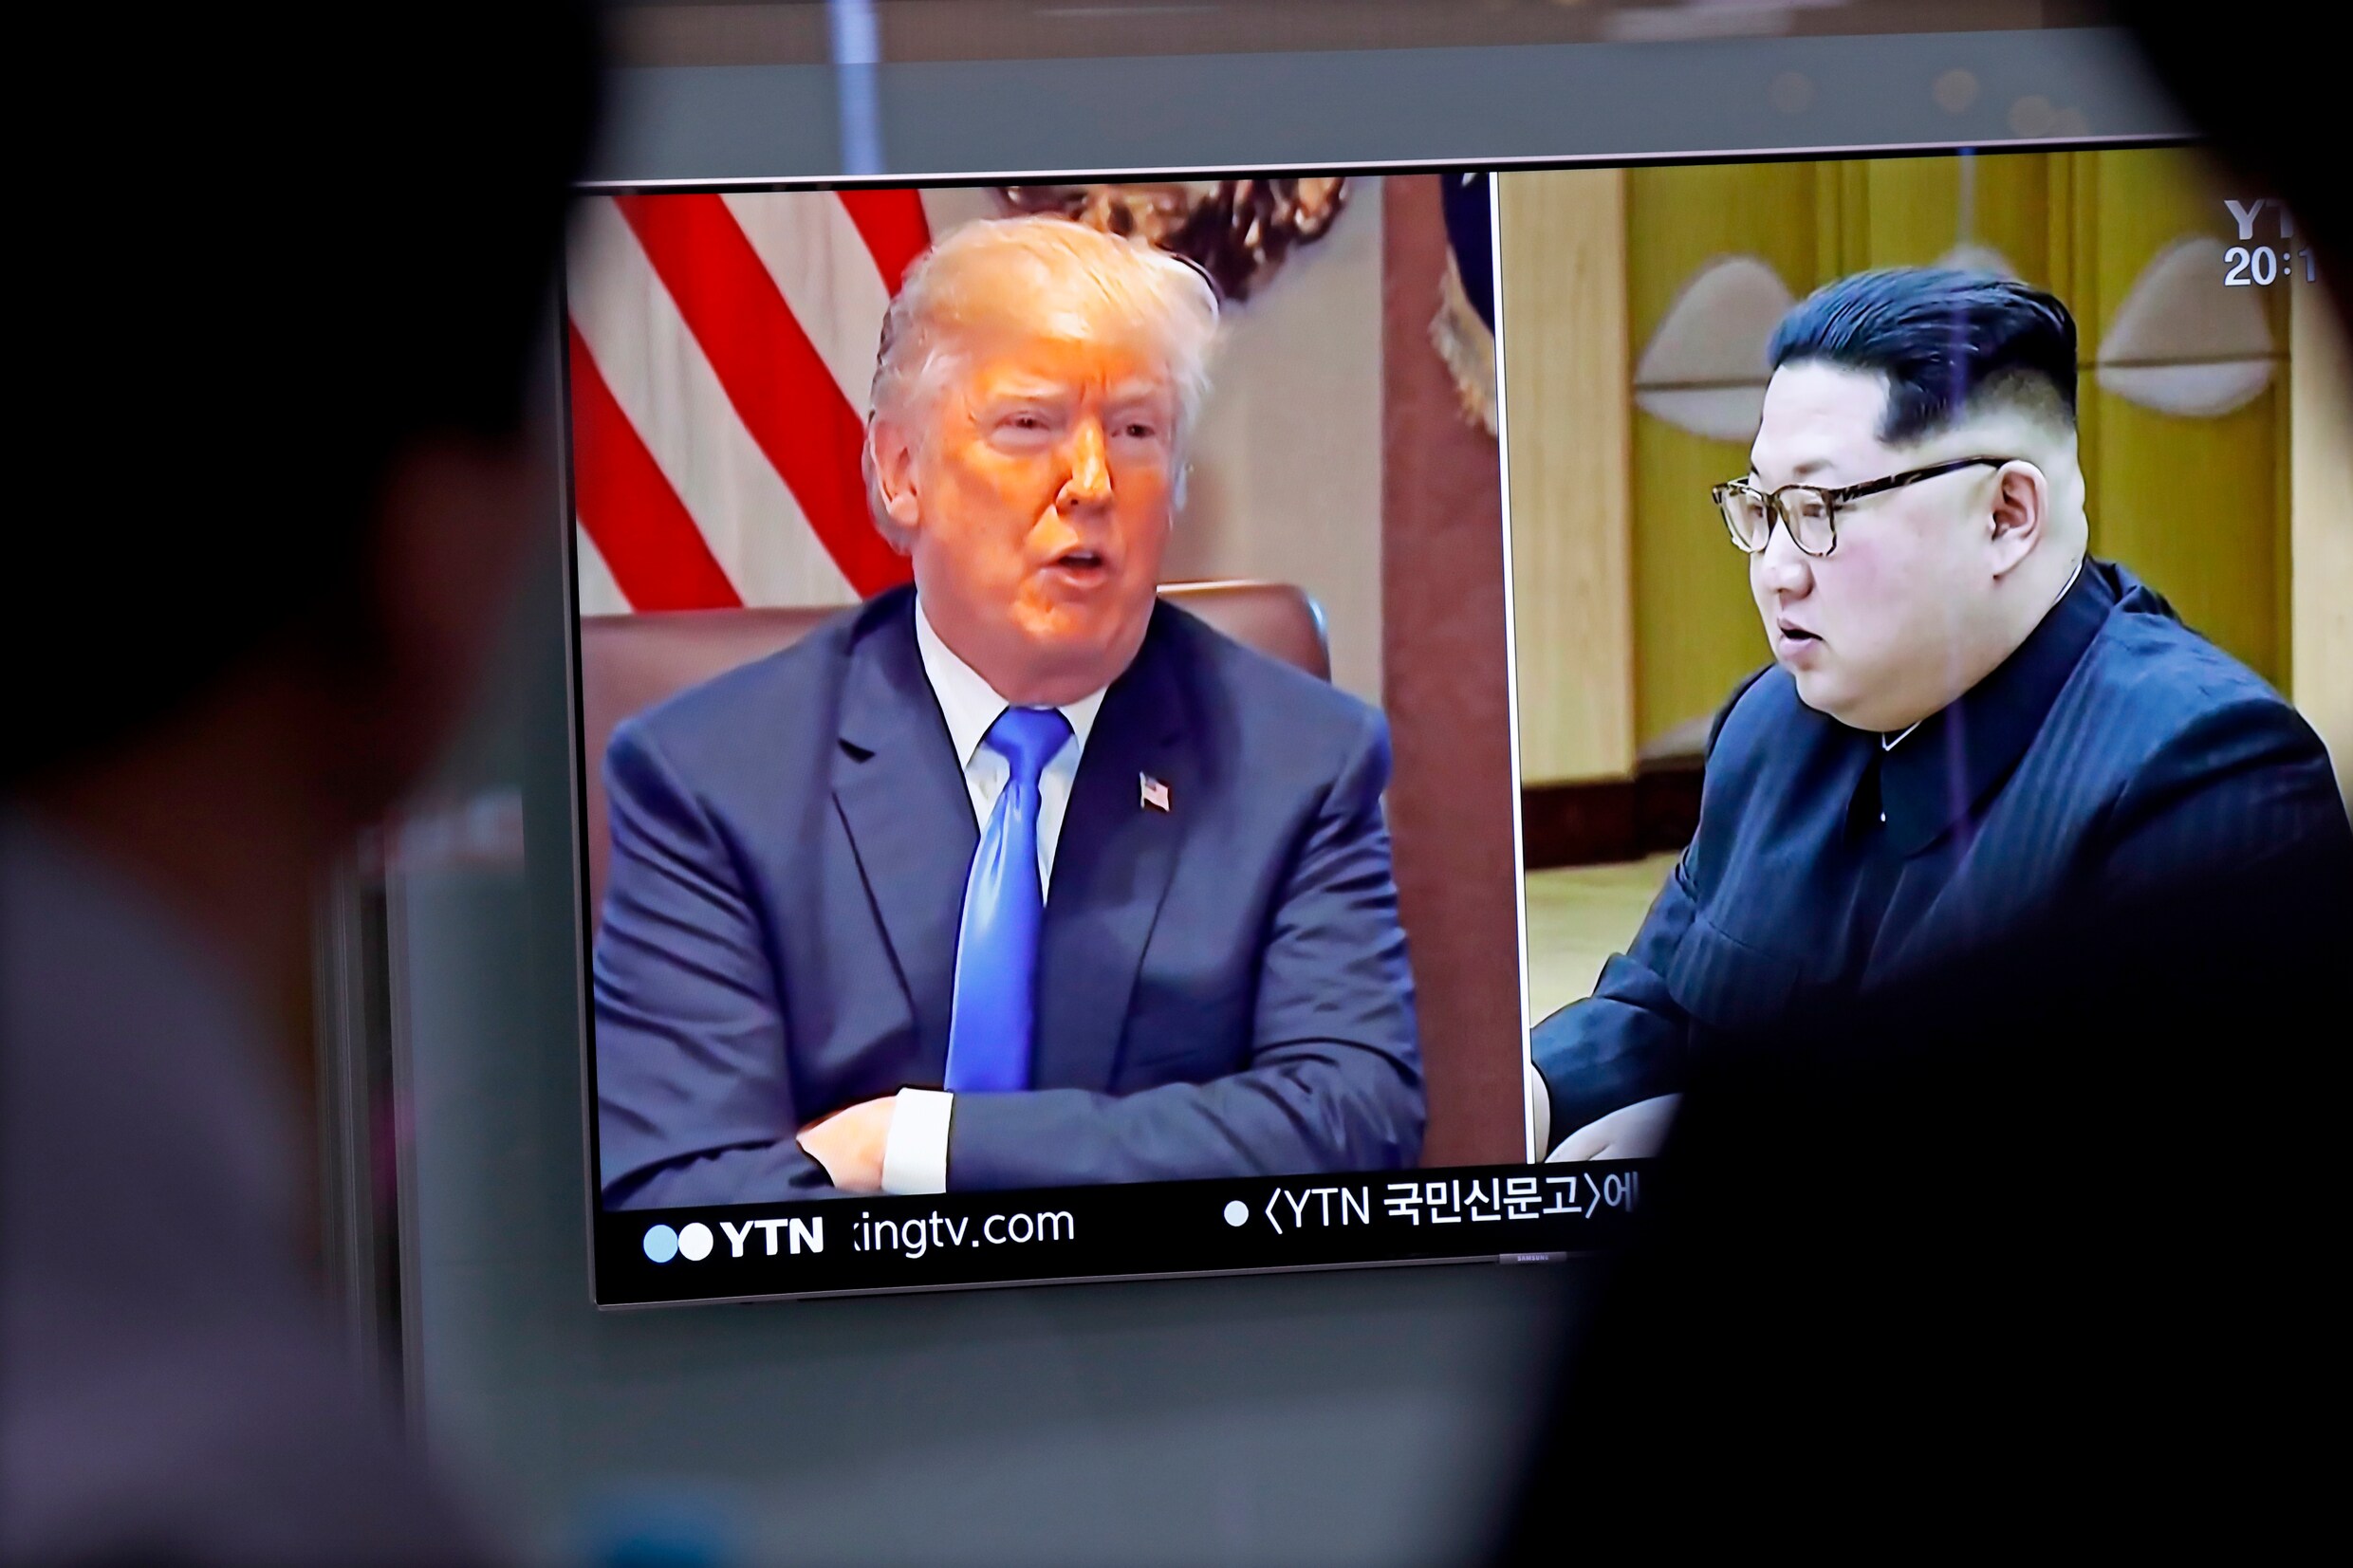 Trump blaast ontmoeting met Kim Jong-un af: "Ons leger staat klaar indien nodig"